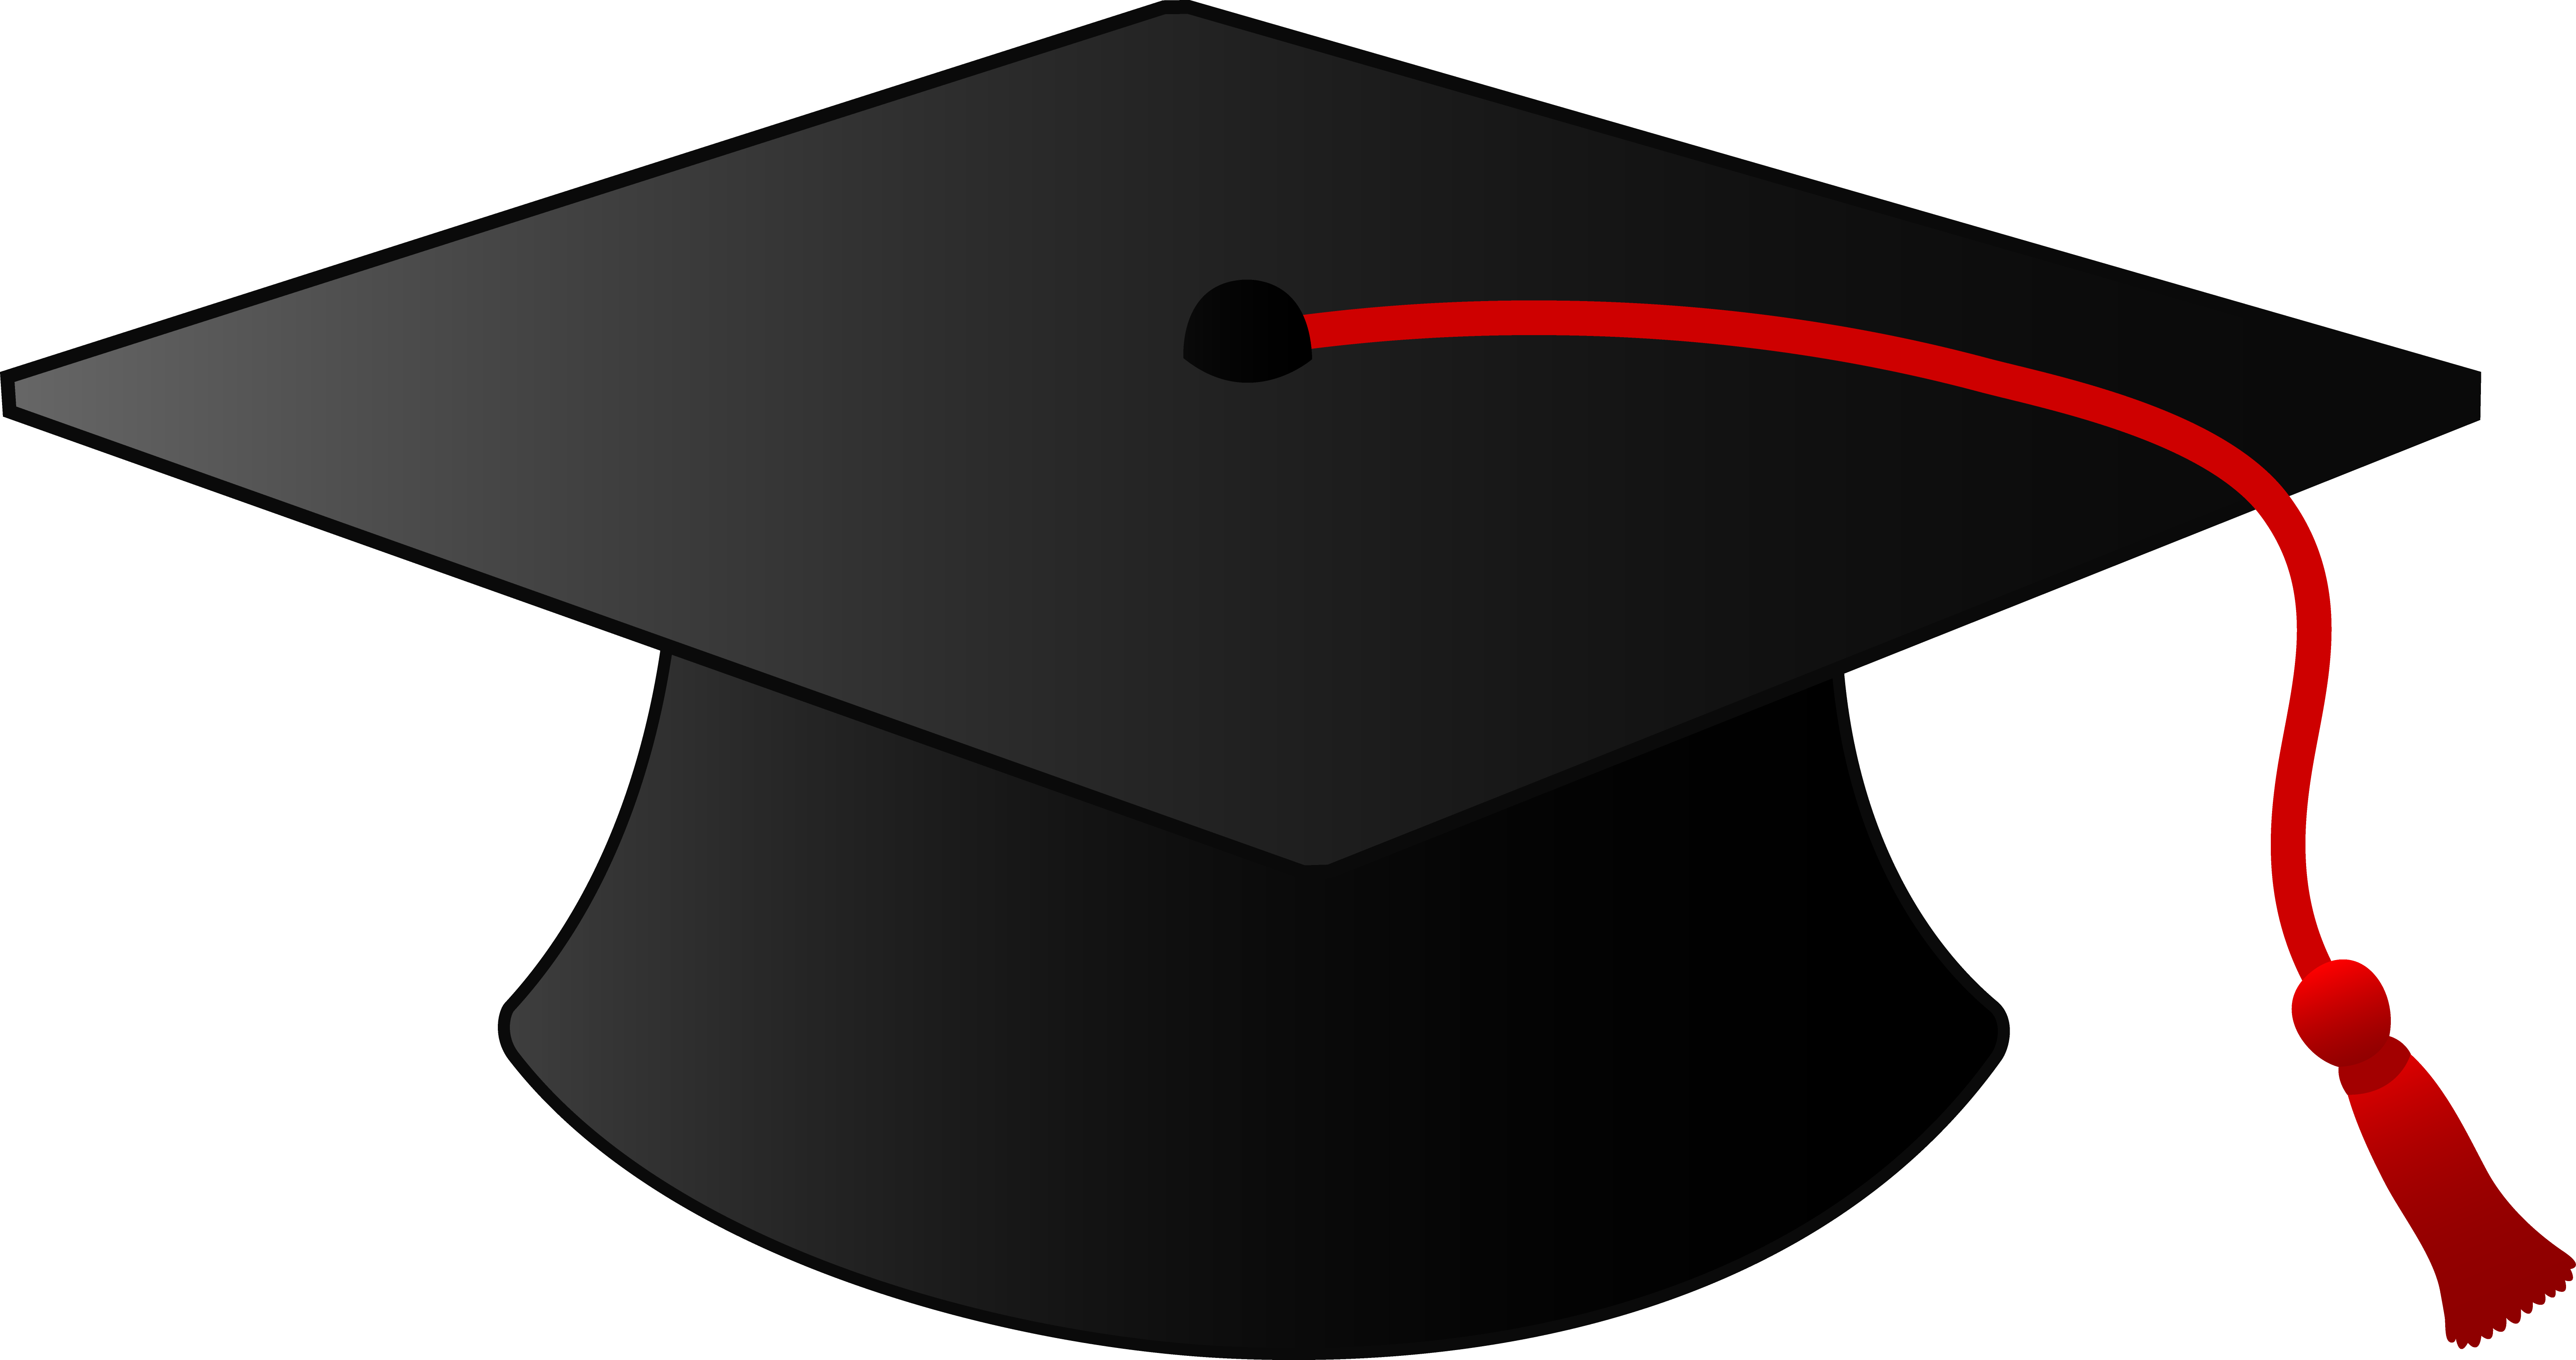 Graduation Cap With Tassel - Free Clip Art